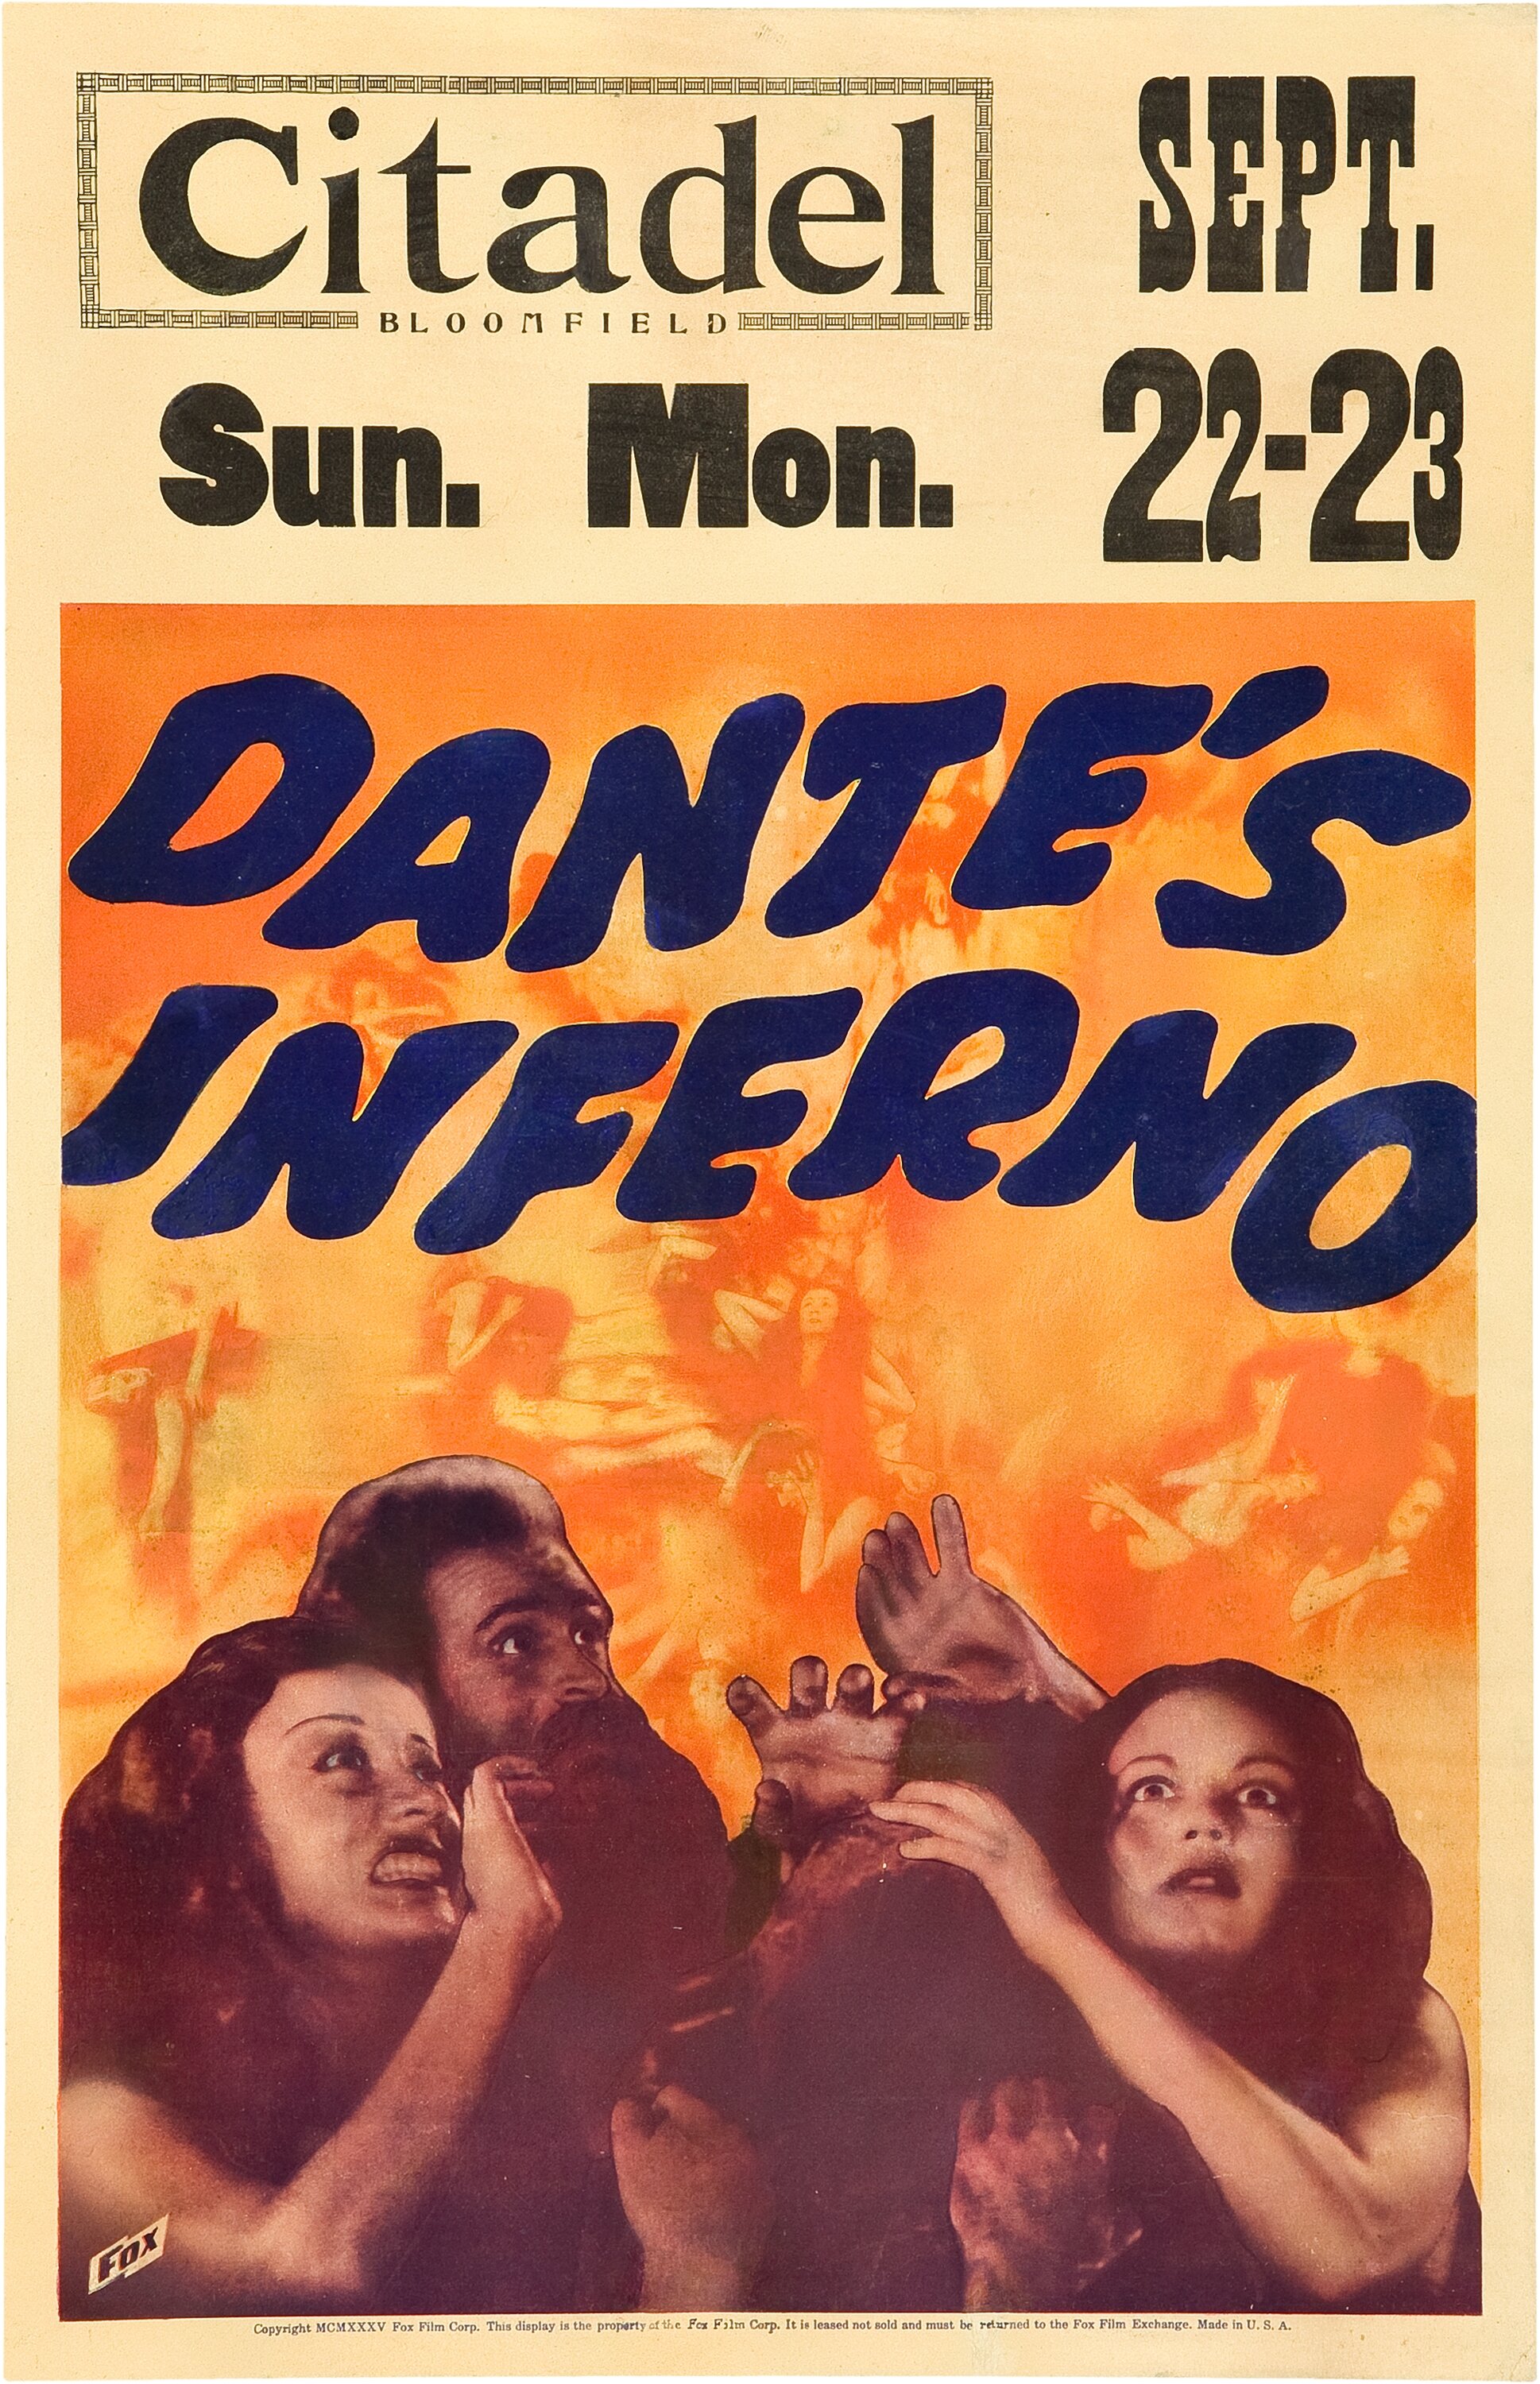 Dante on Film' Harry Lachman's Dante's Inferno (1935)